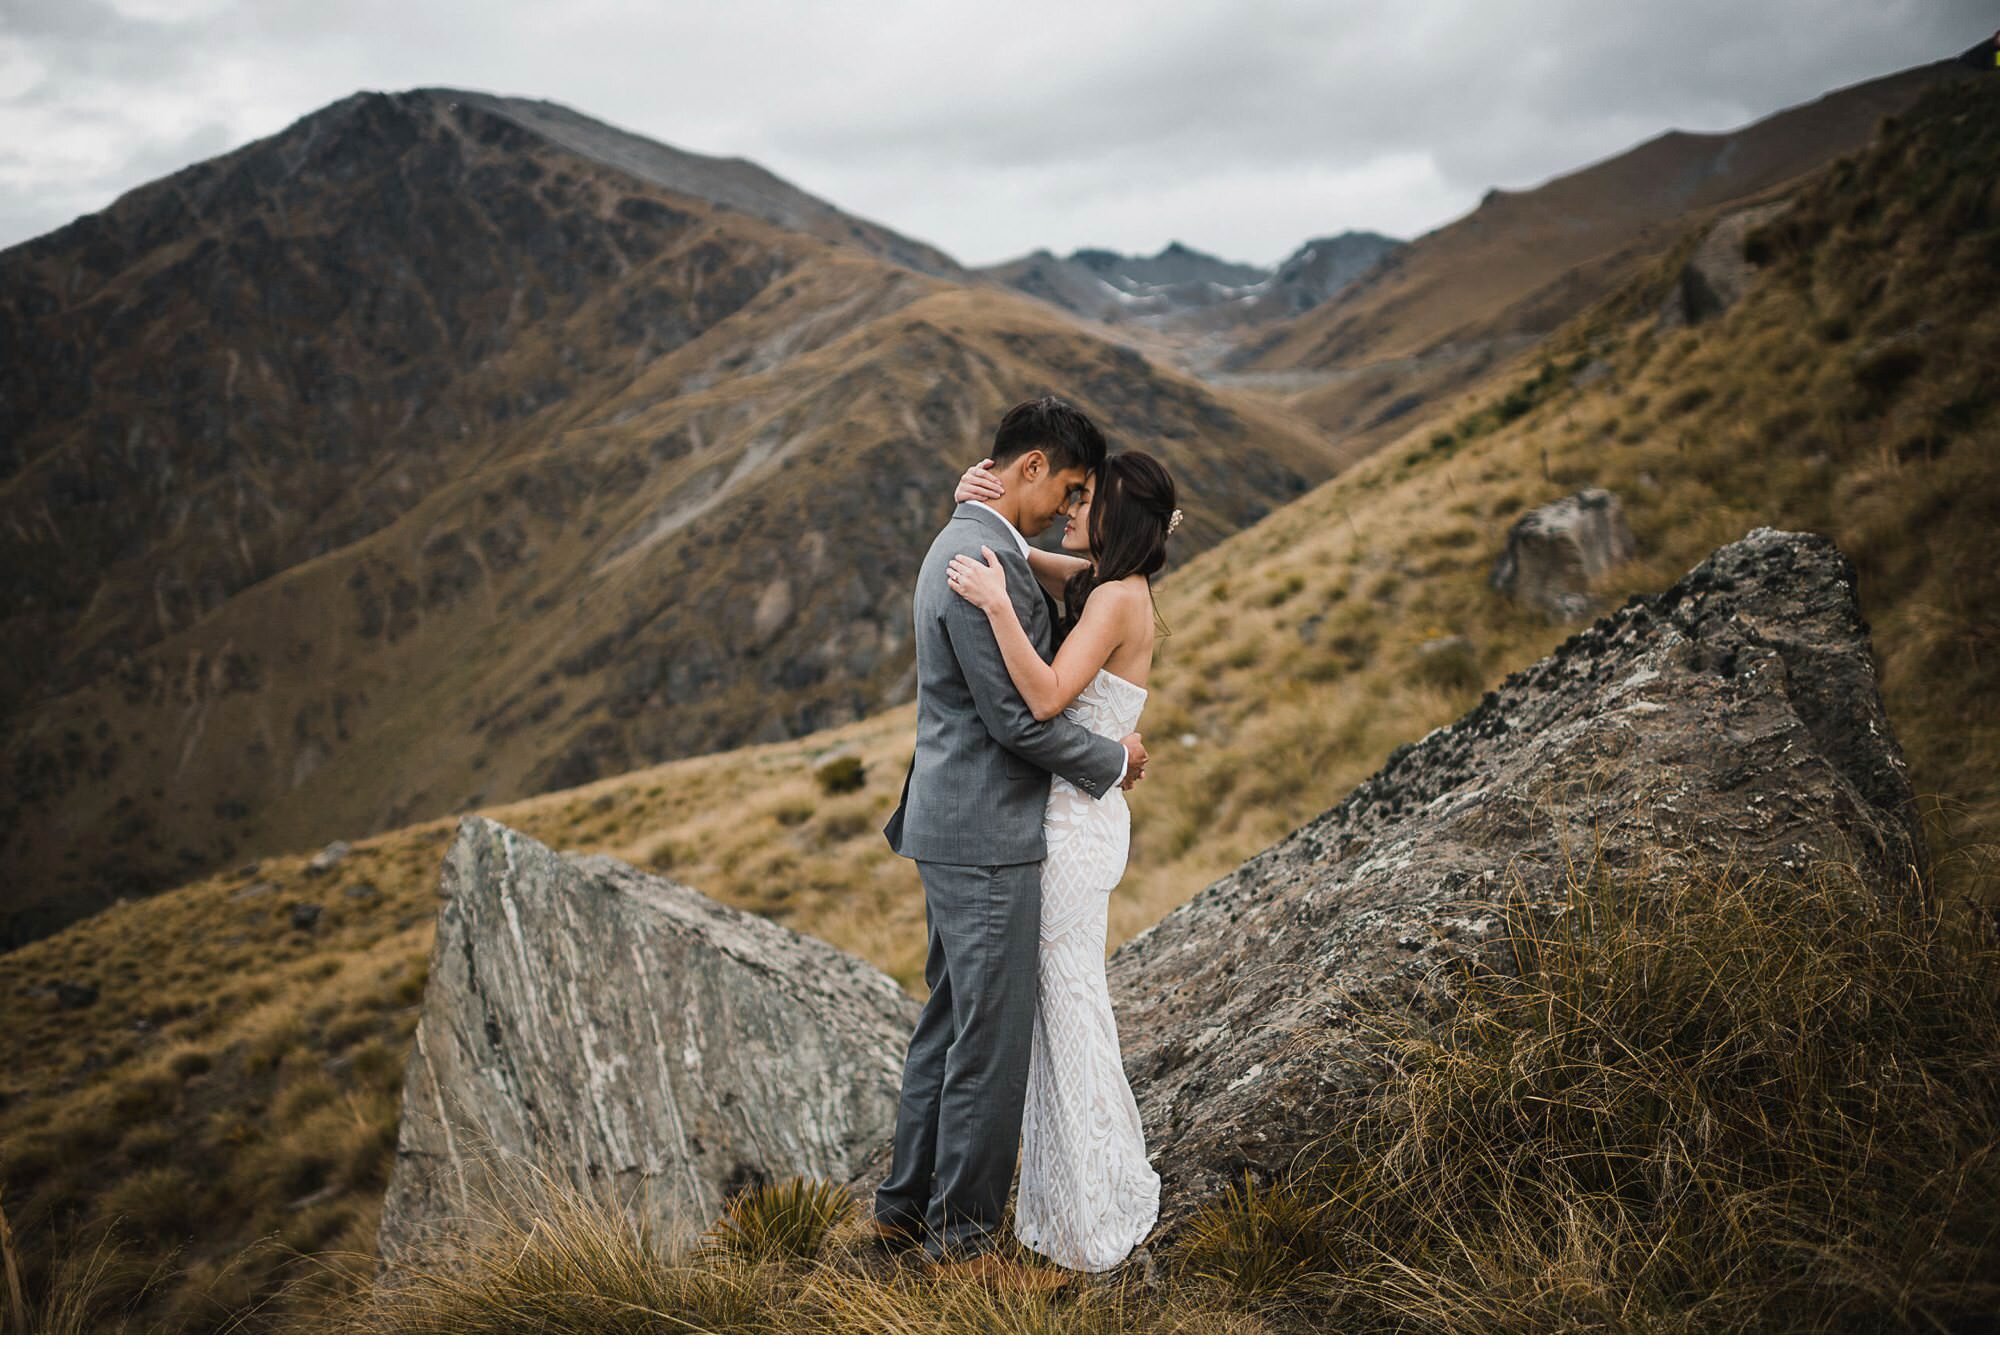 057 - New Zealand Wedding Photography Highlights.jpg